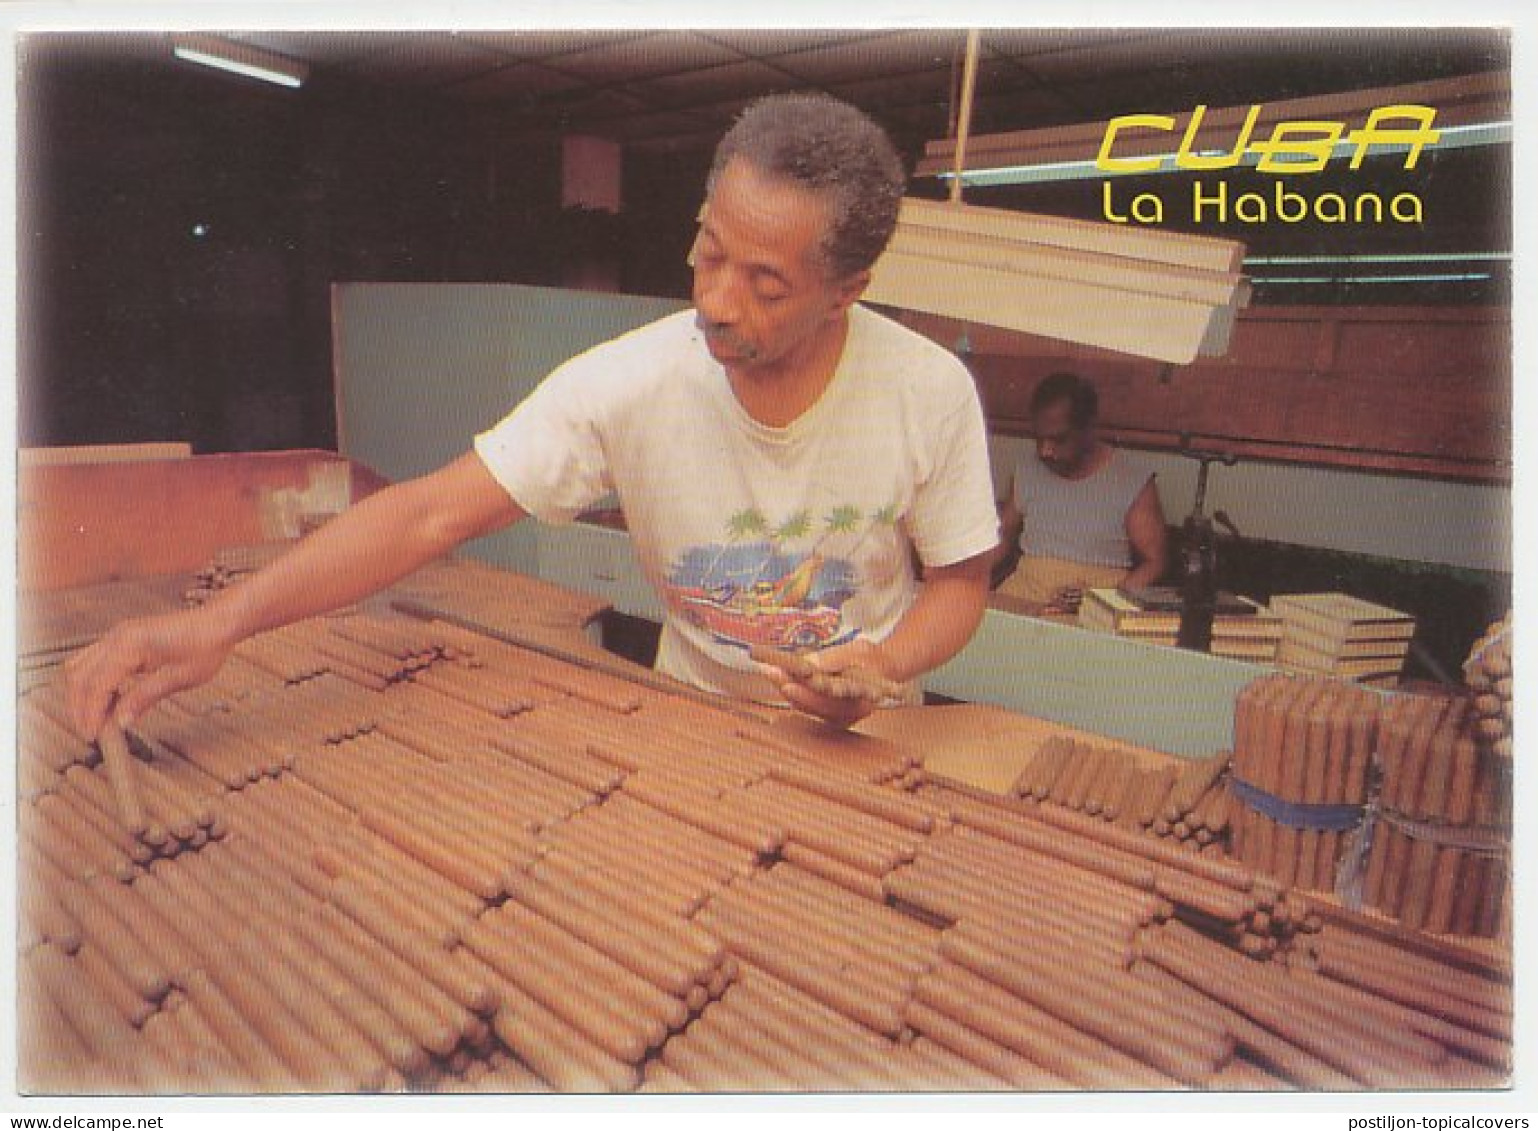 Postal Stationery Cuba 2000 Cigar - Tabaco